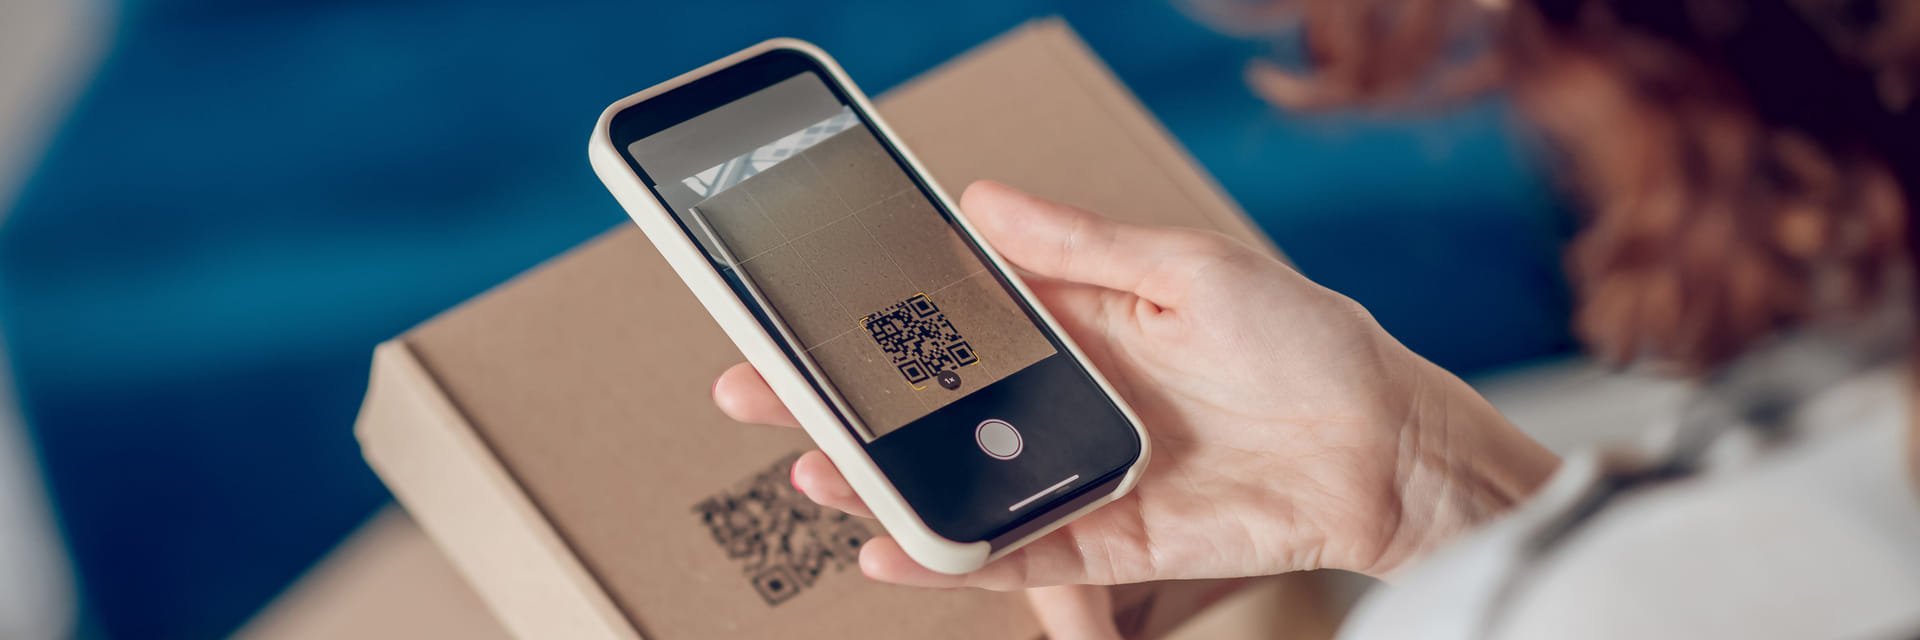 Cross platform mobile app for goods self-scanning and checkout